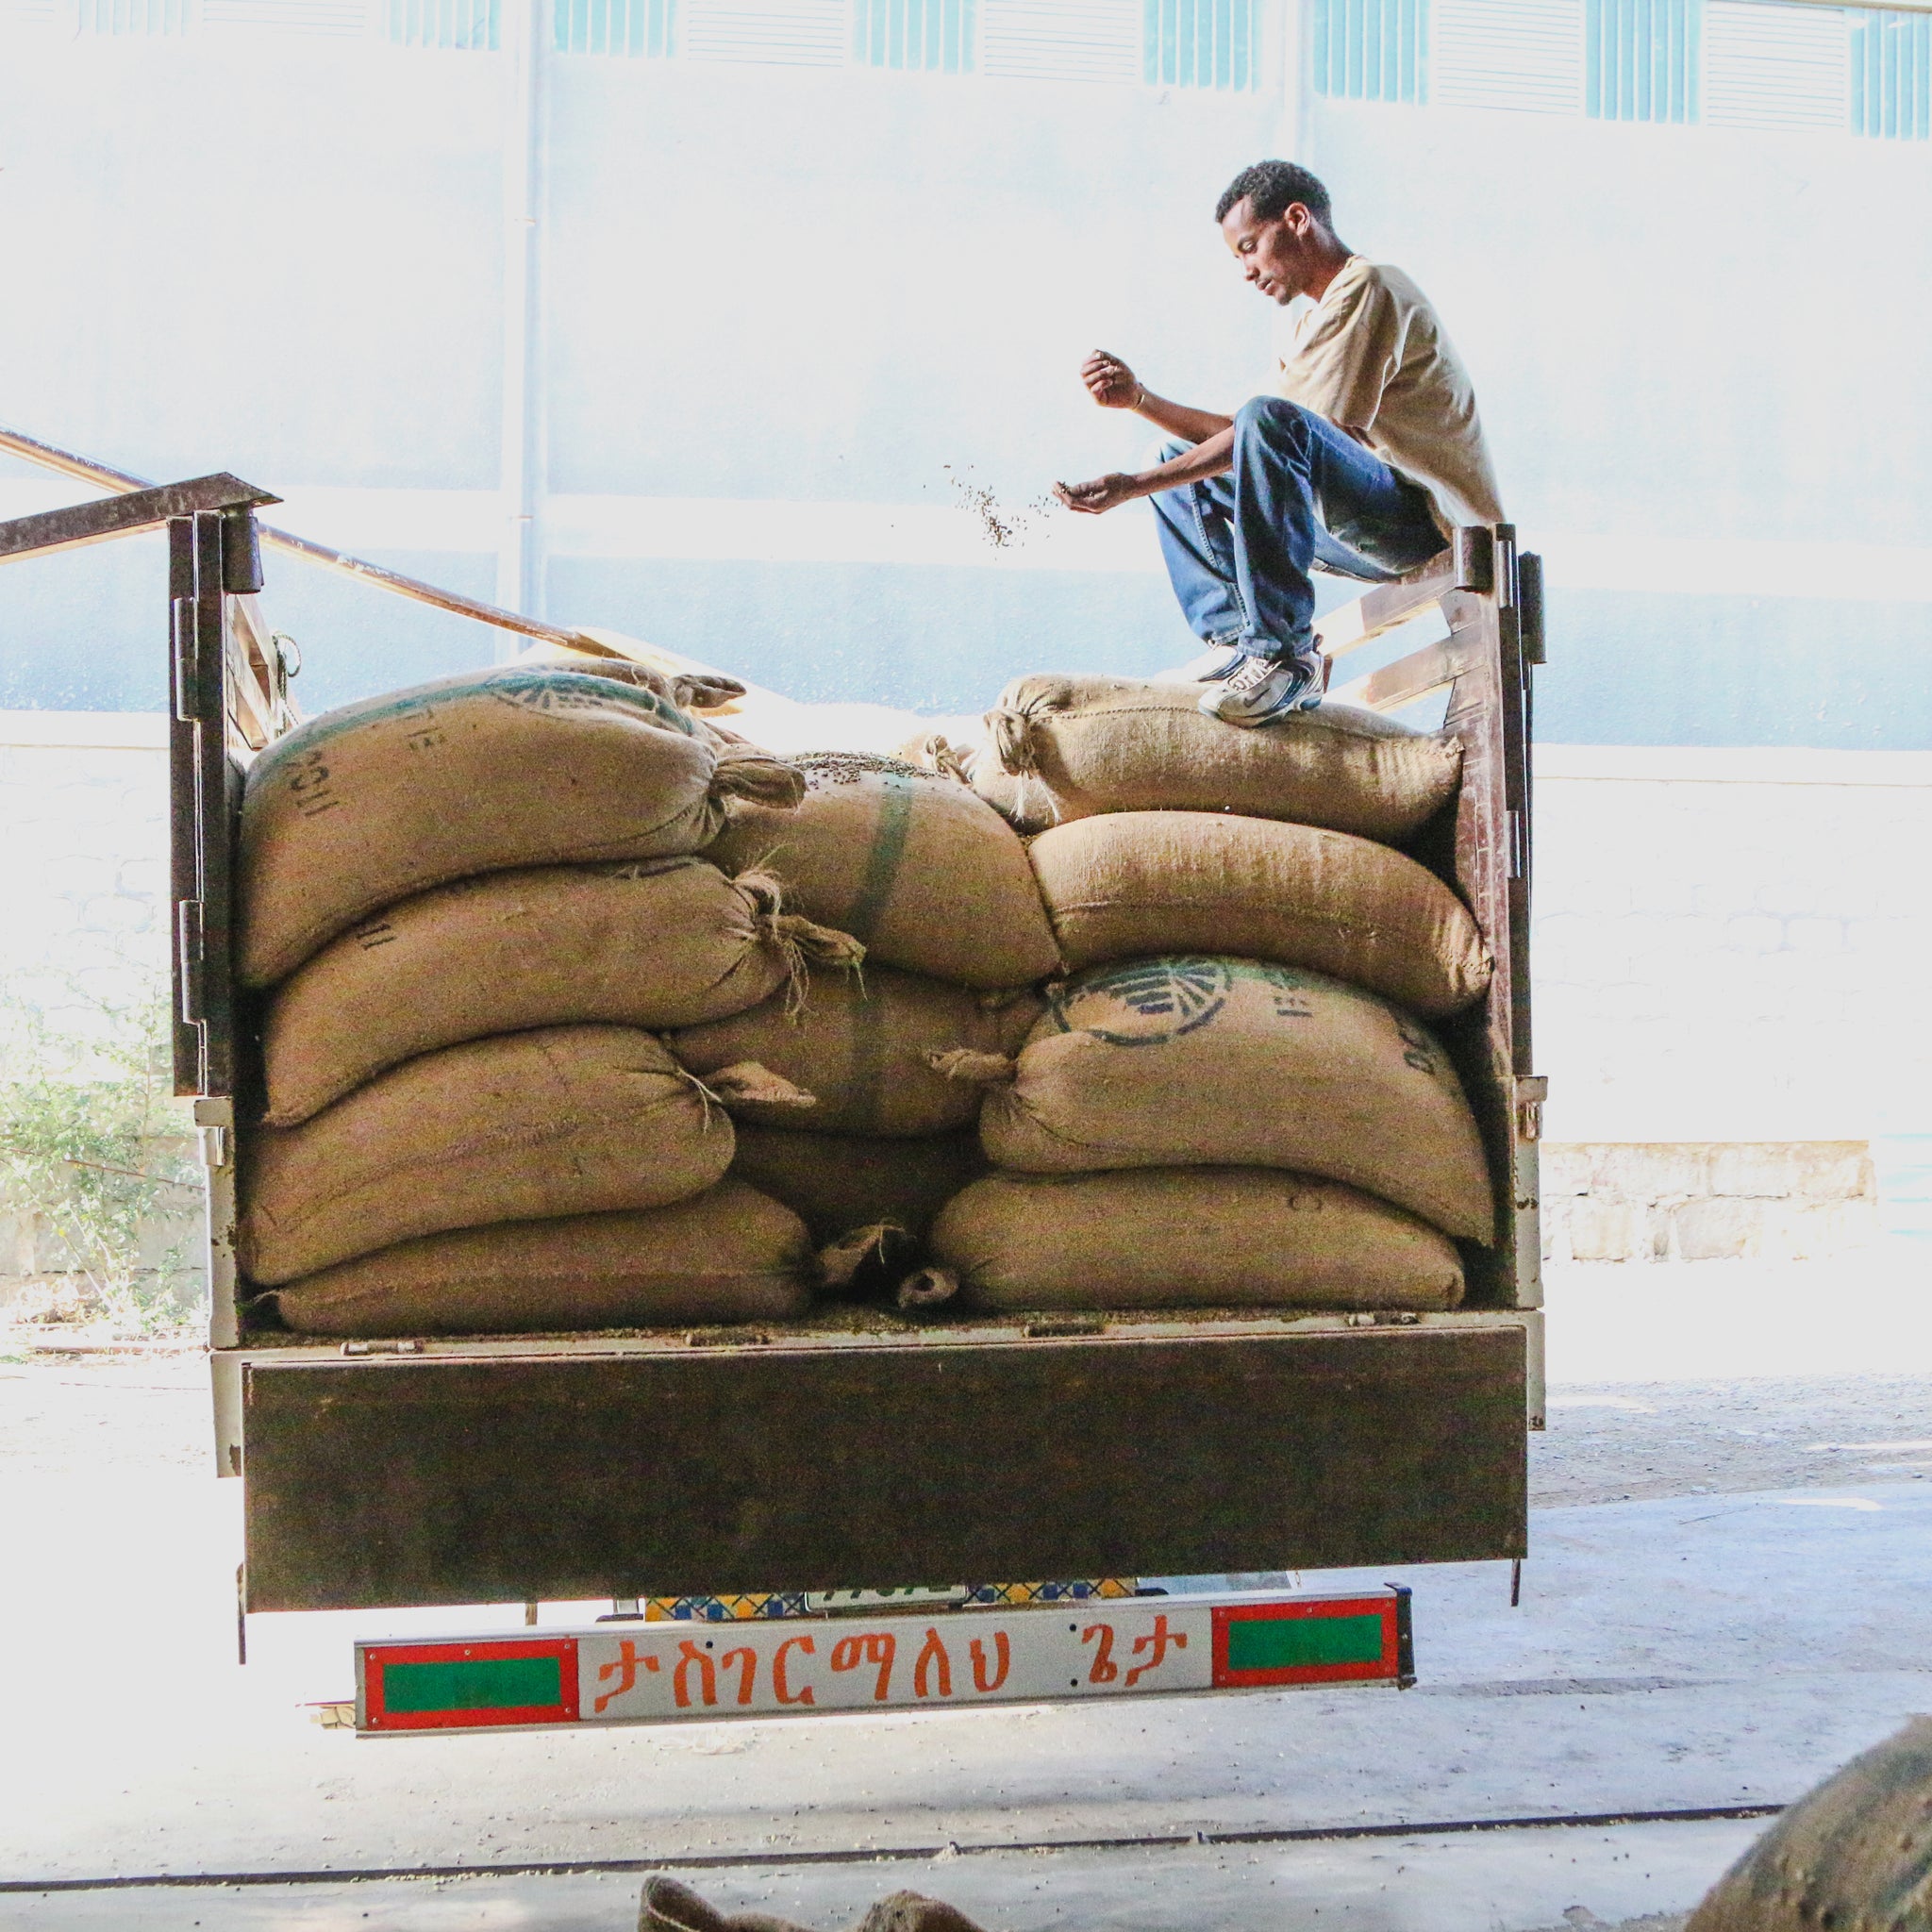 Unloading coffee at origin warehouse